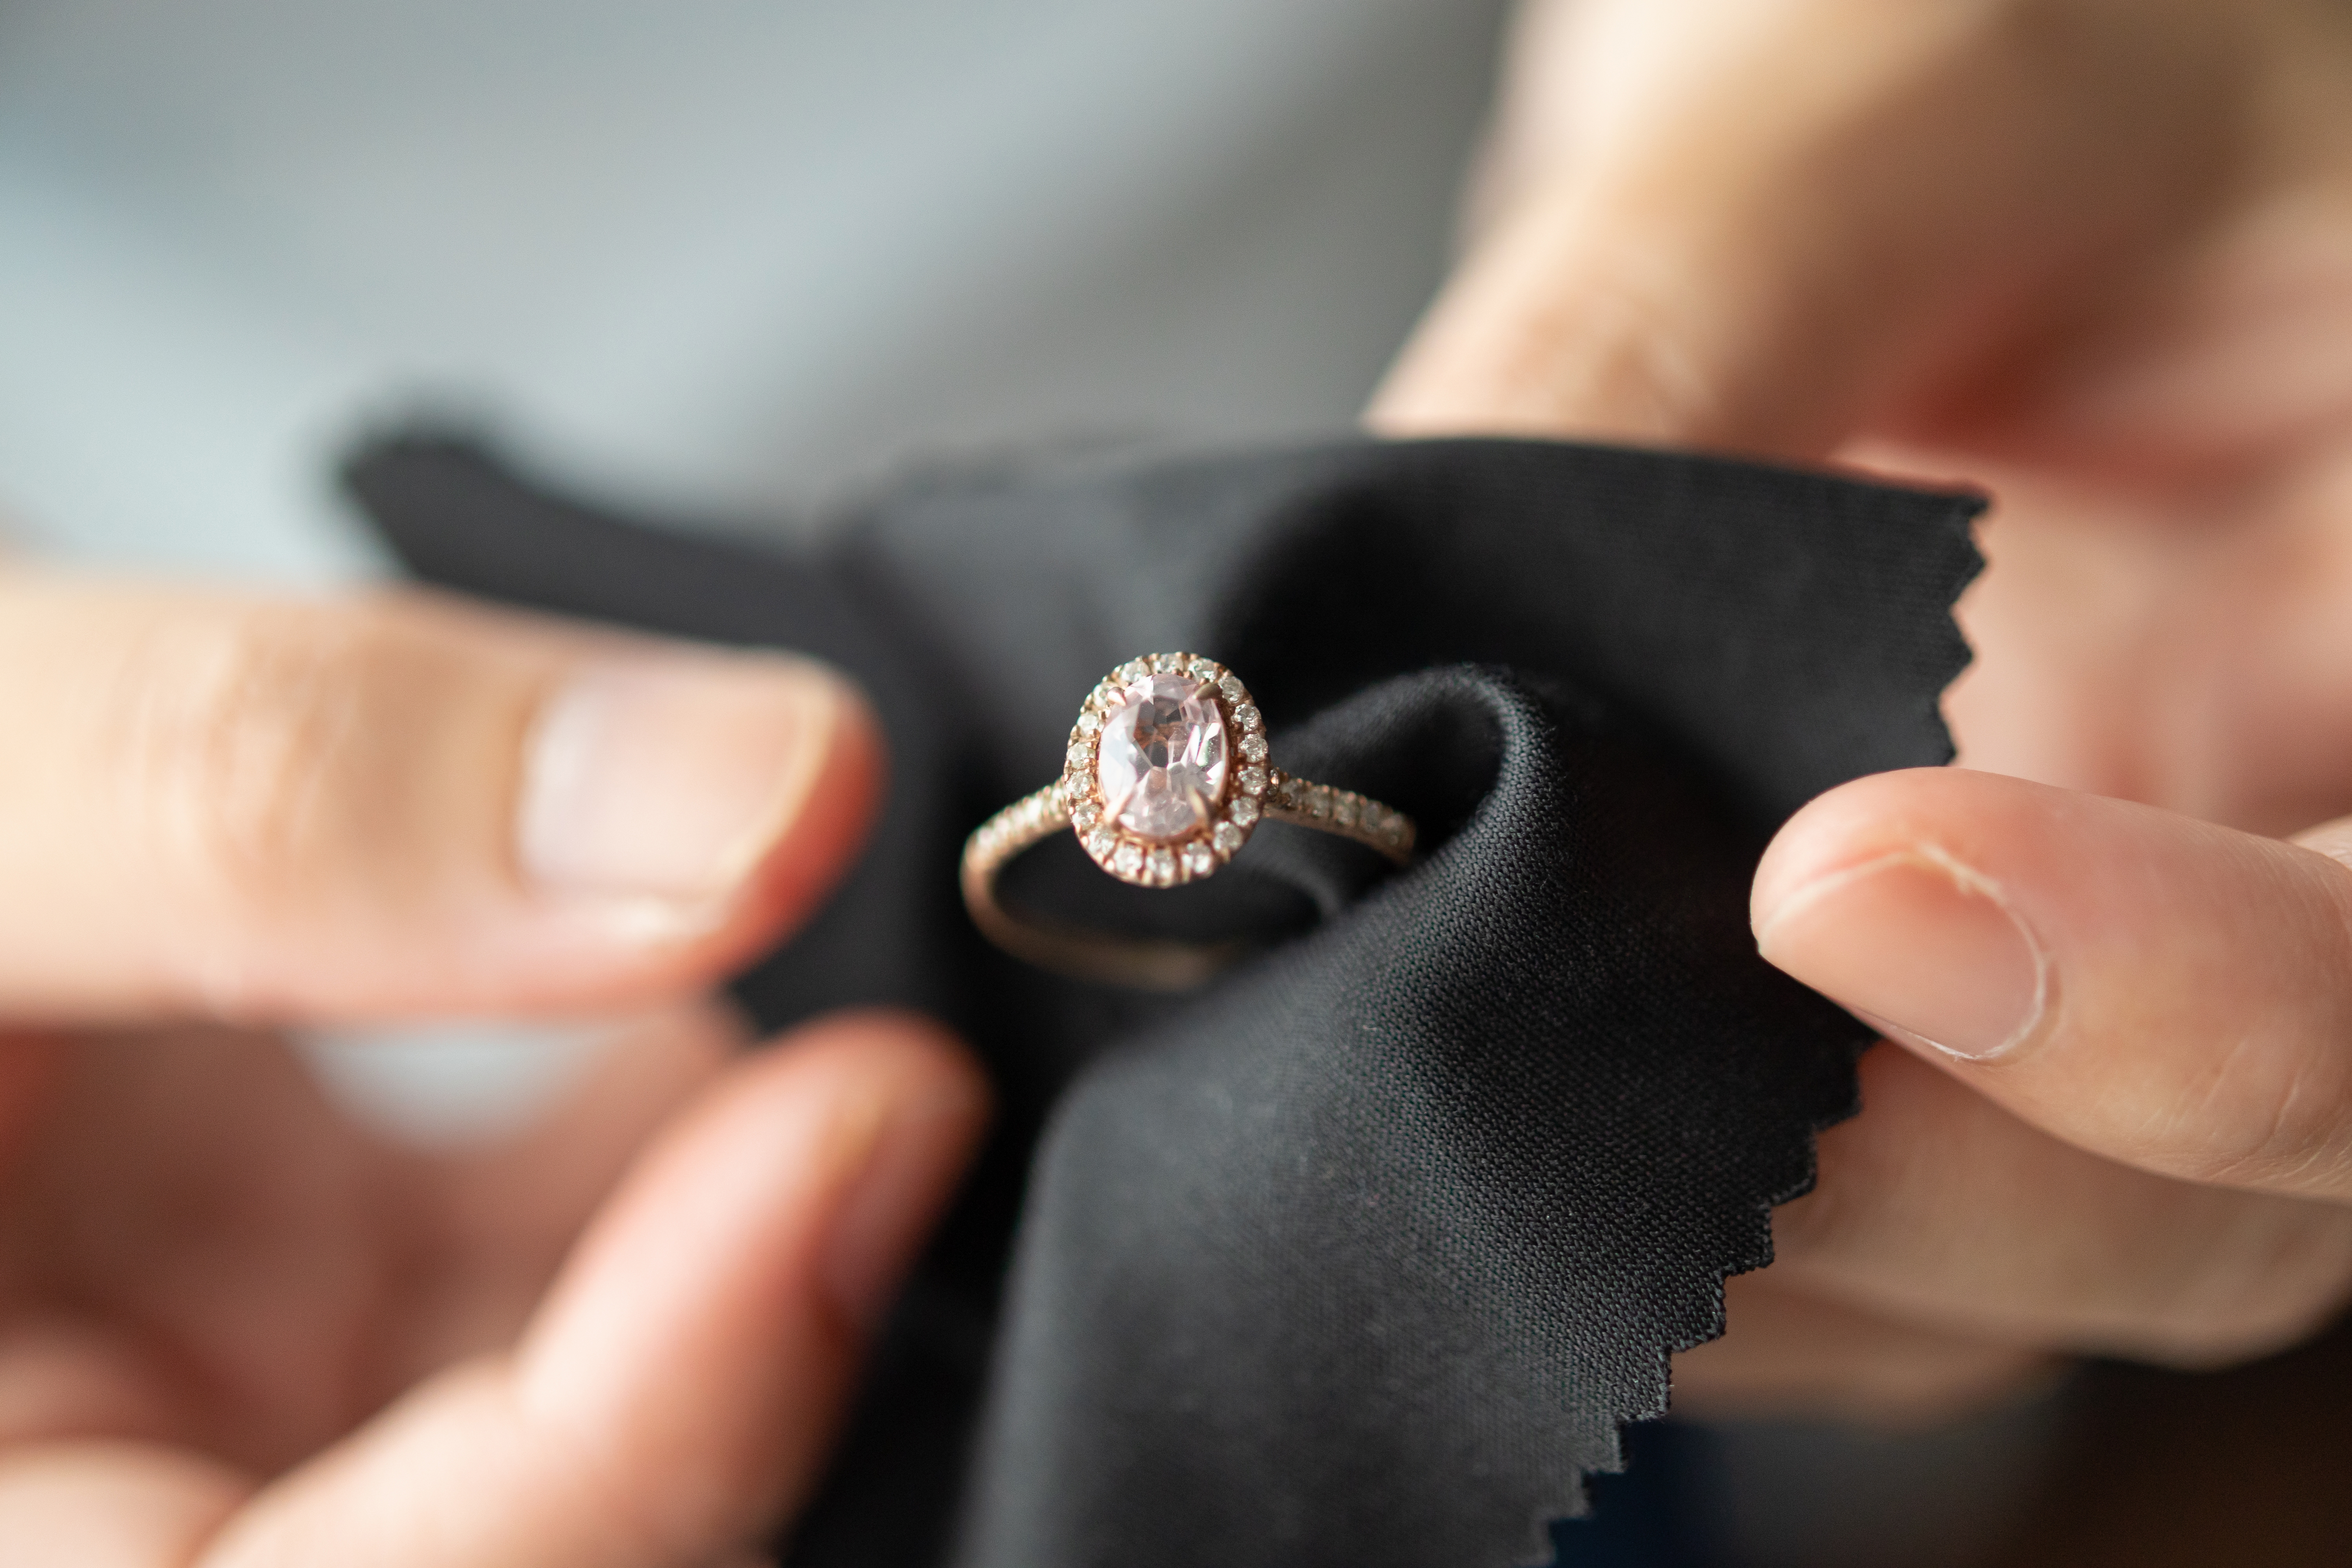 Diamond ring on fabric cloth | Source: Shutterstock